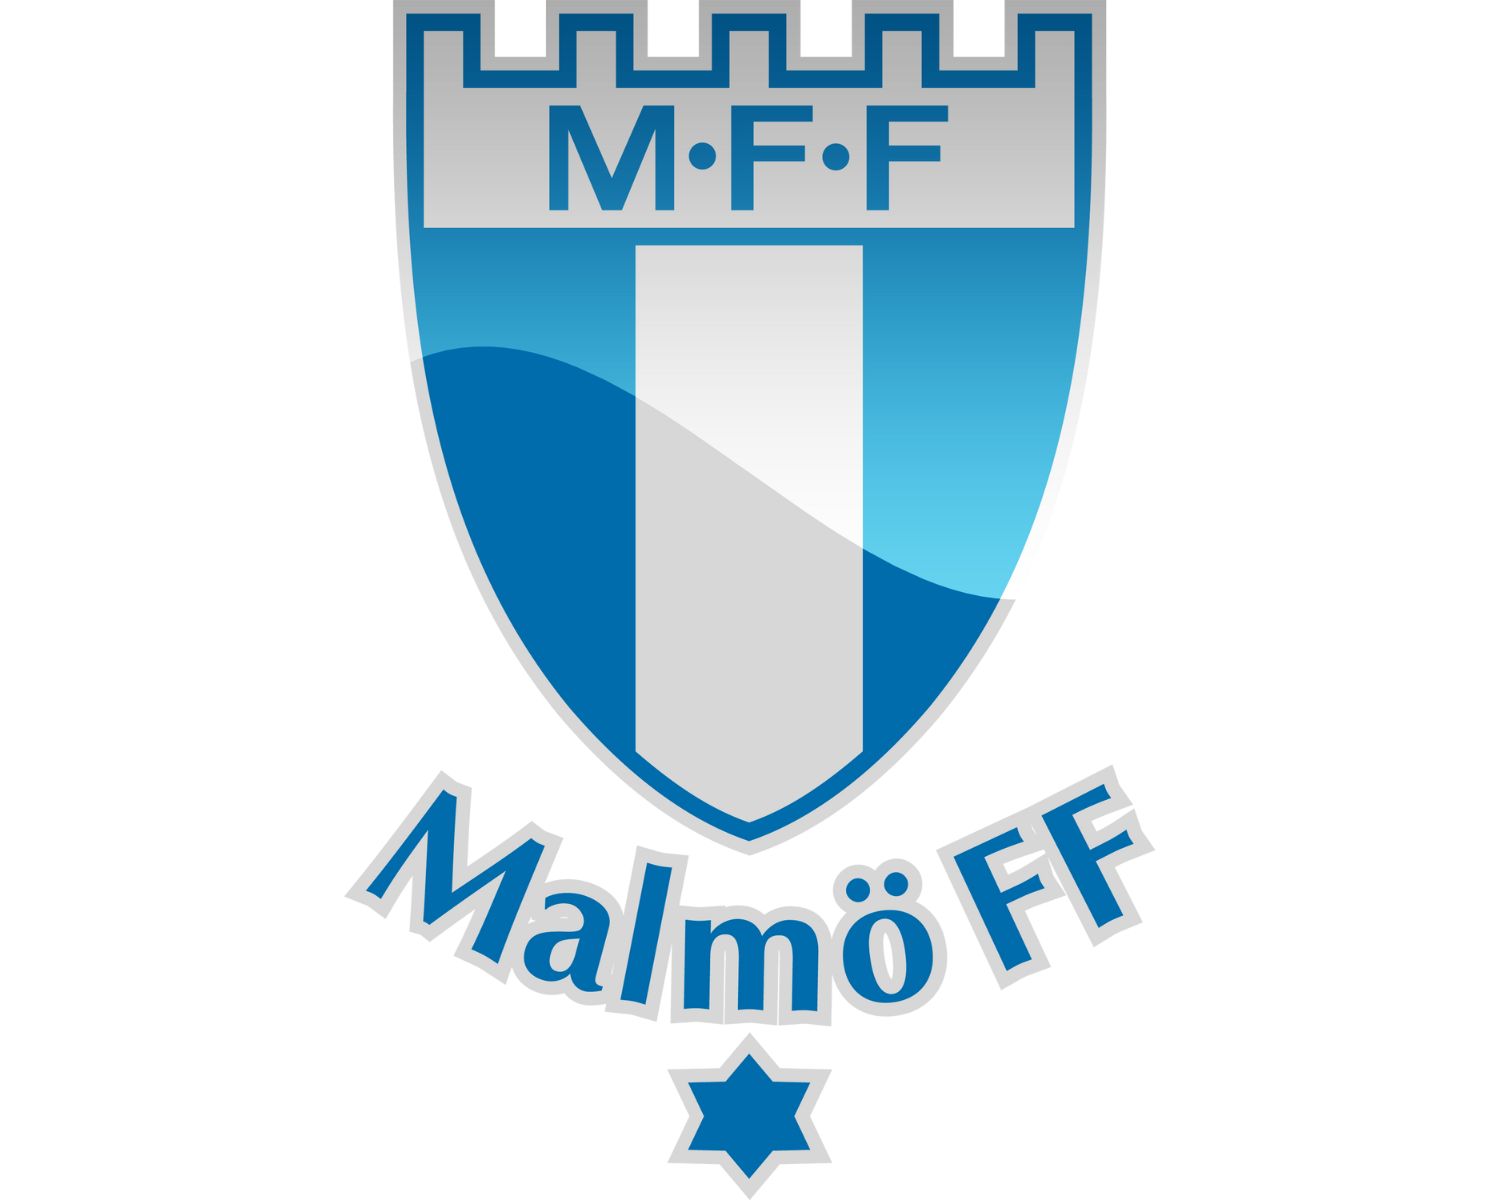 Malmö Ff: 18 Football Club Facts - Facts.net